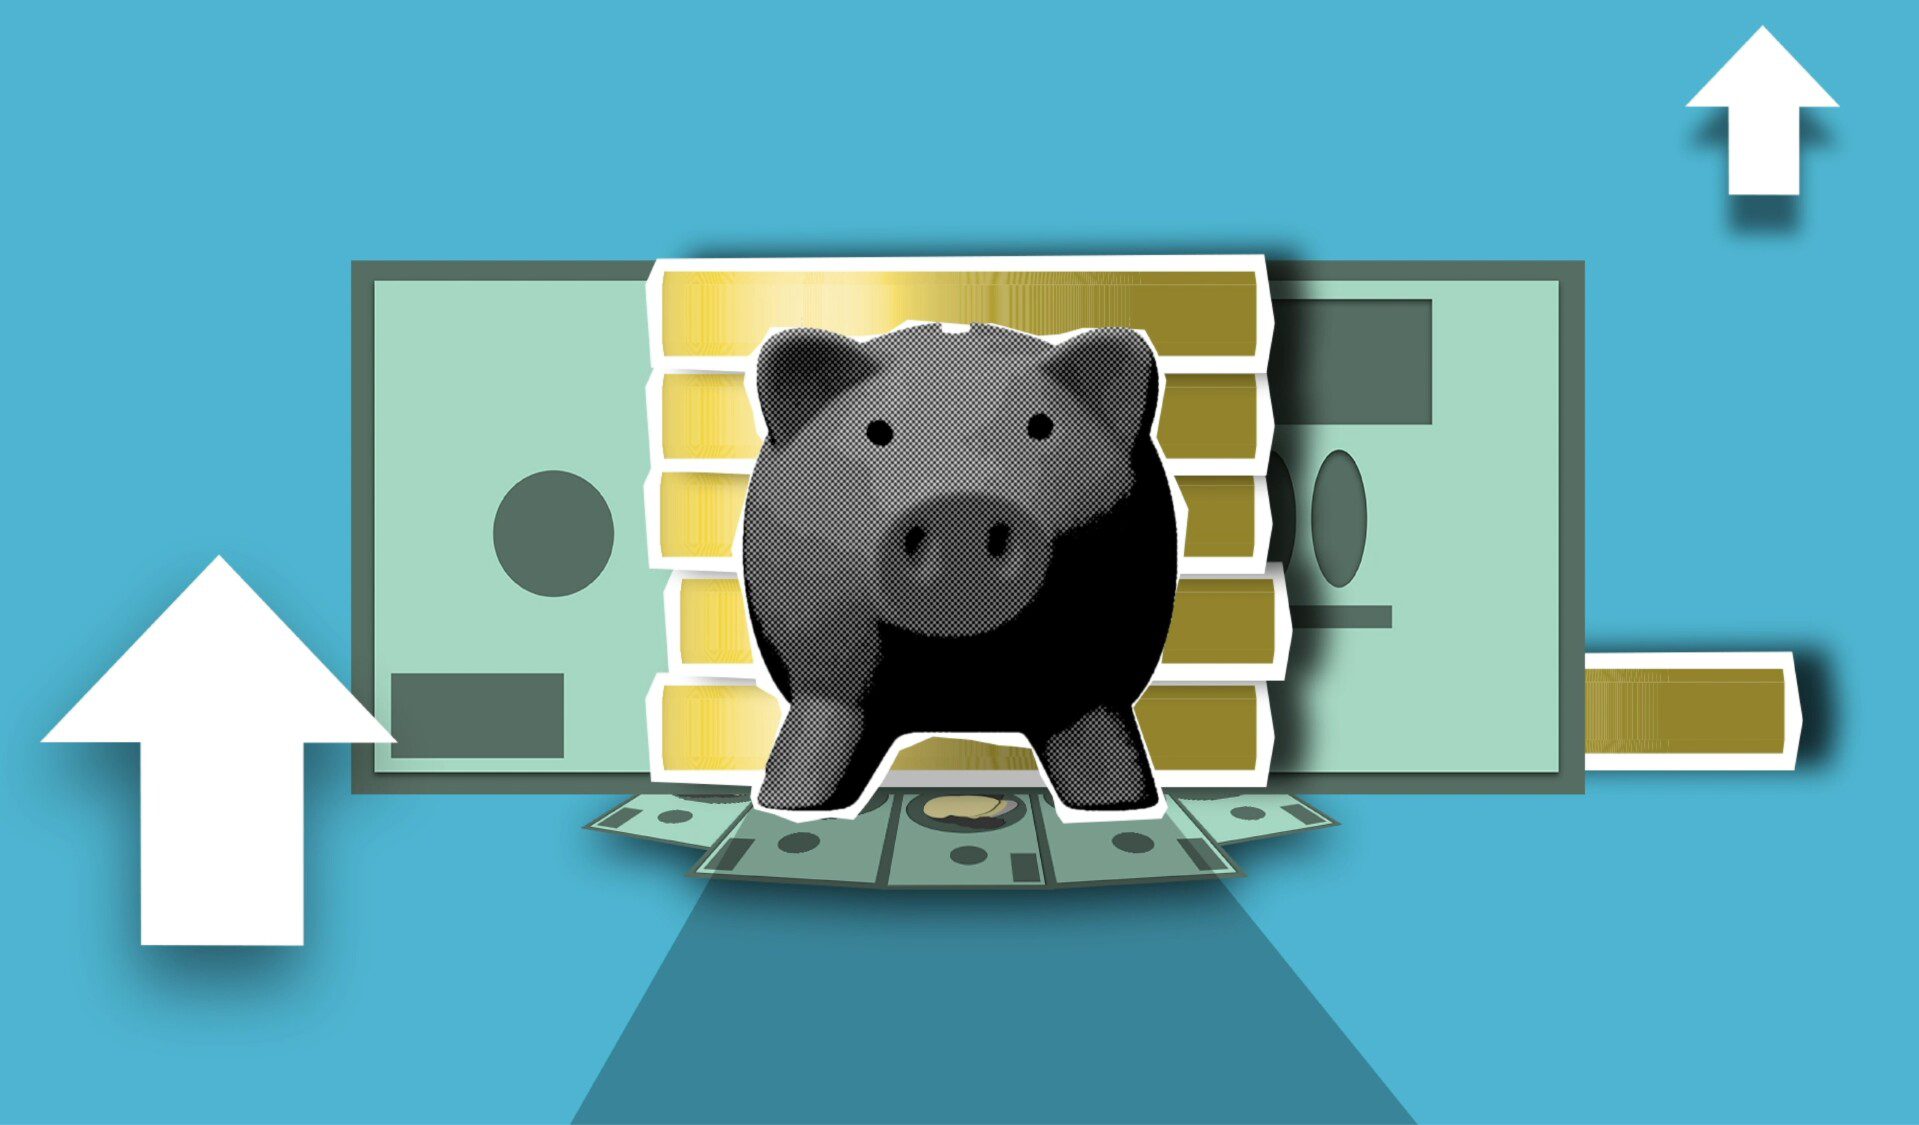 Piggy Bank in front of money